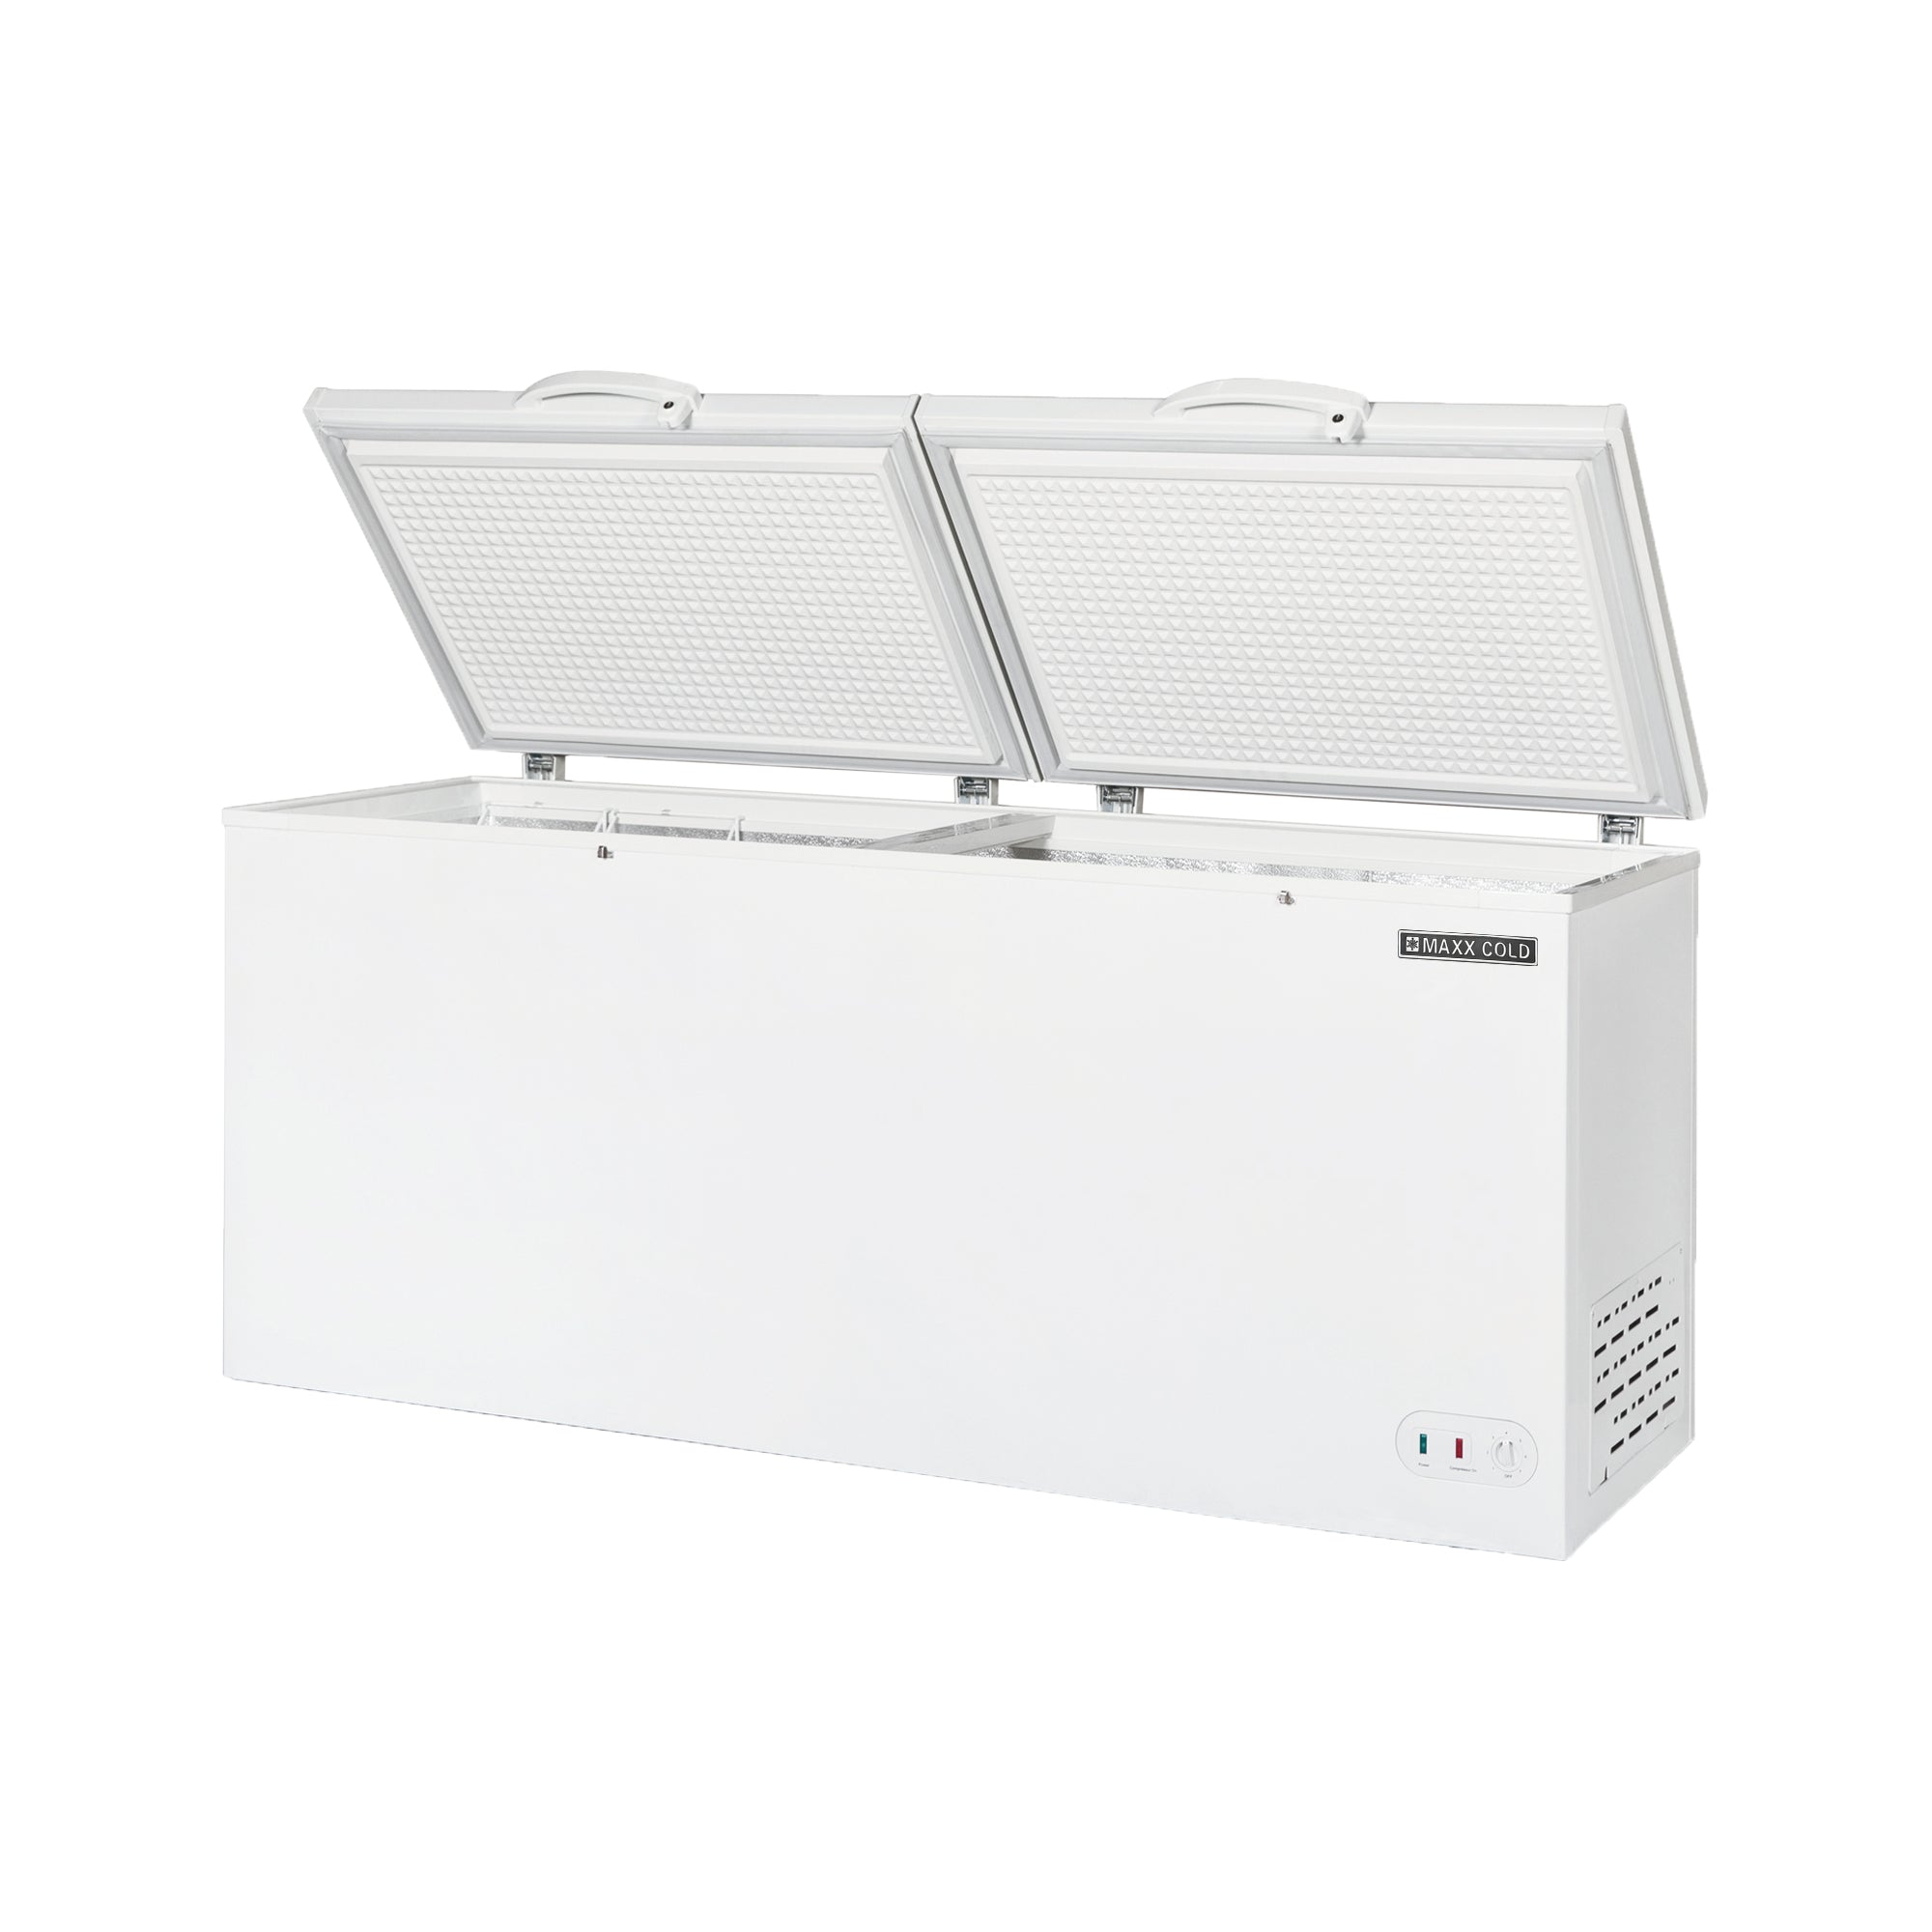 Maxx Cold - MXSH30.0SHC, Maxx Cold Extra Large Chest Freezer with Split Top, 76"W, 30 cu ft. Storage Capacity, Locking Lids, Garage Ready, in White